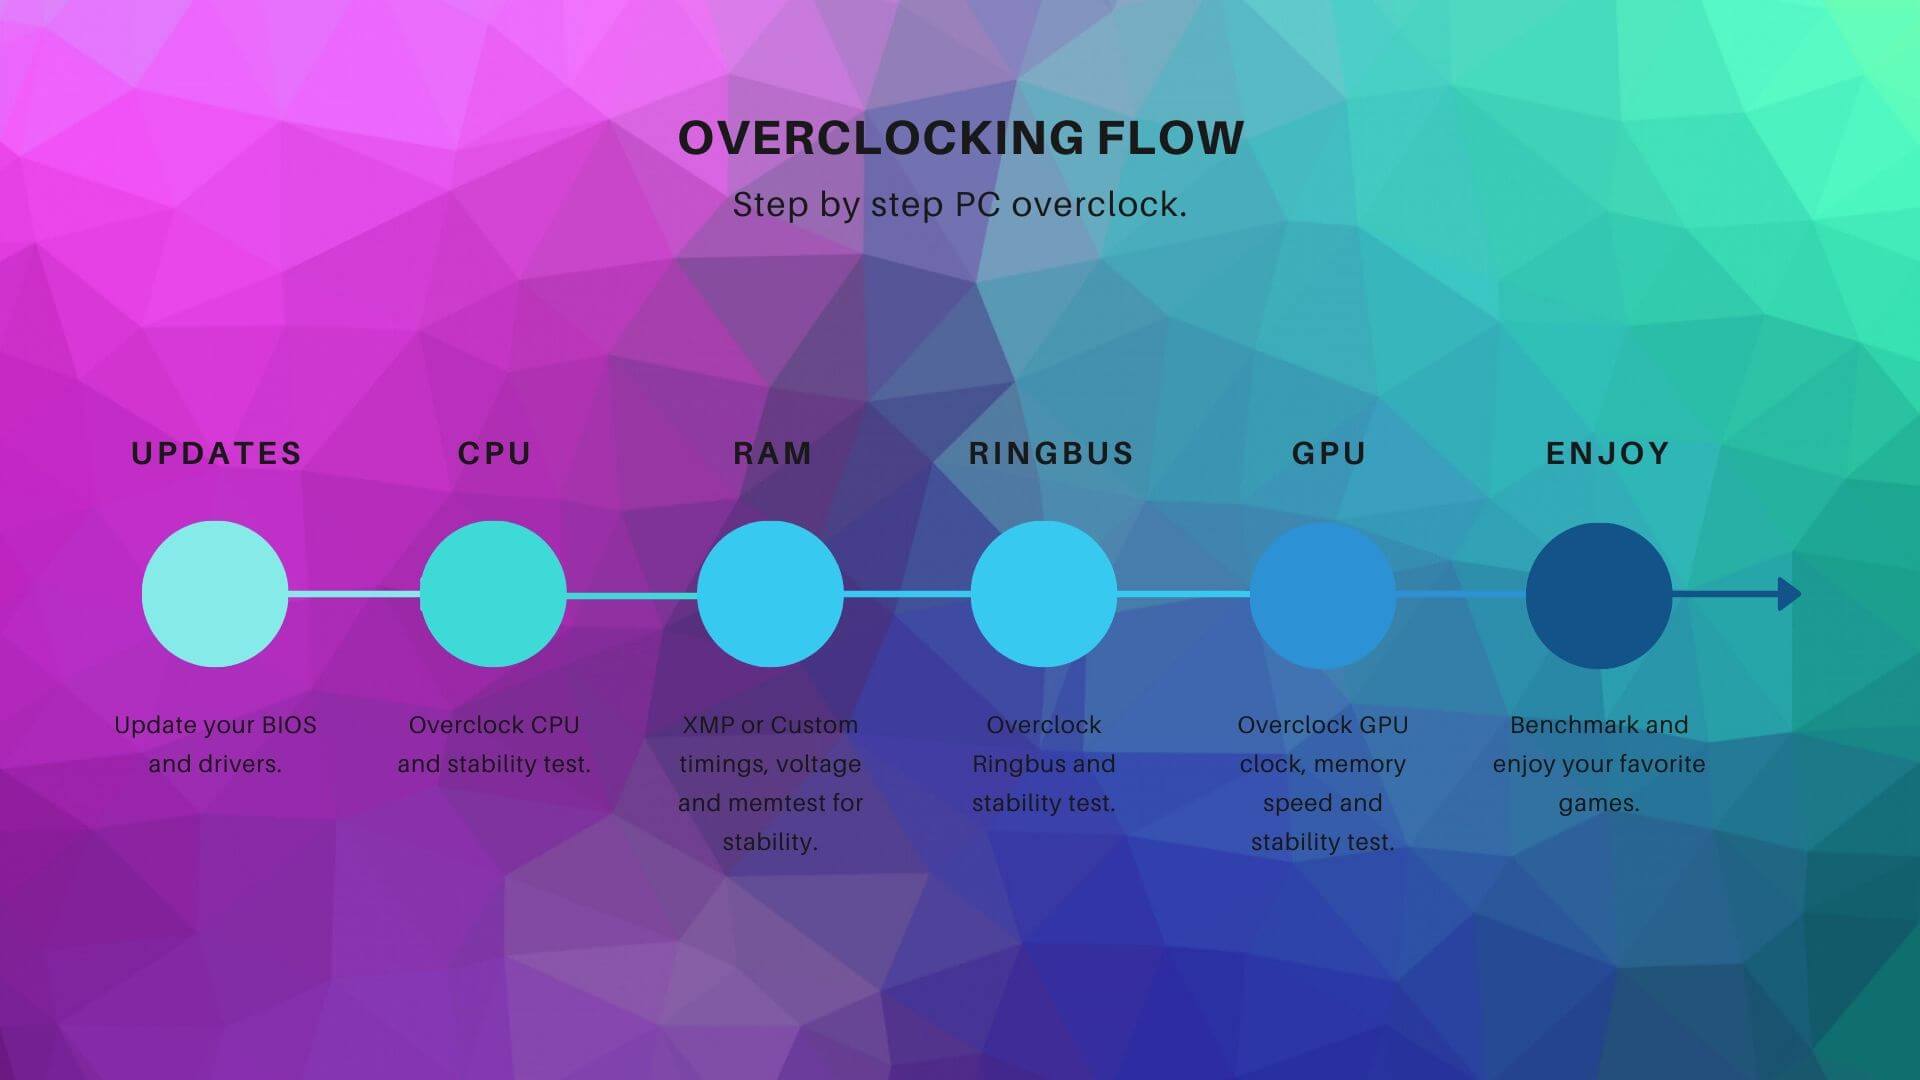 Intel overclocking flow